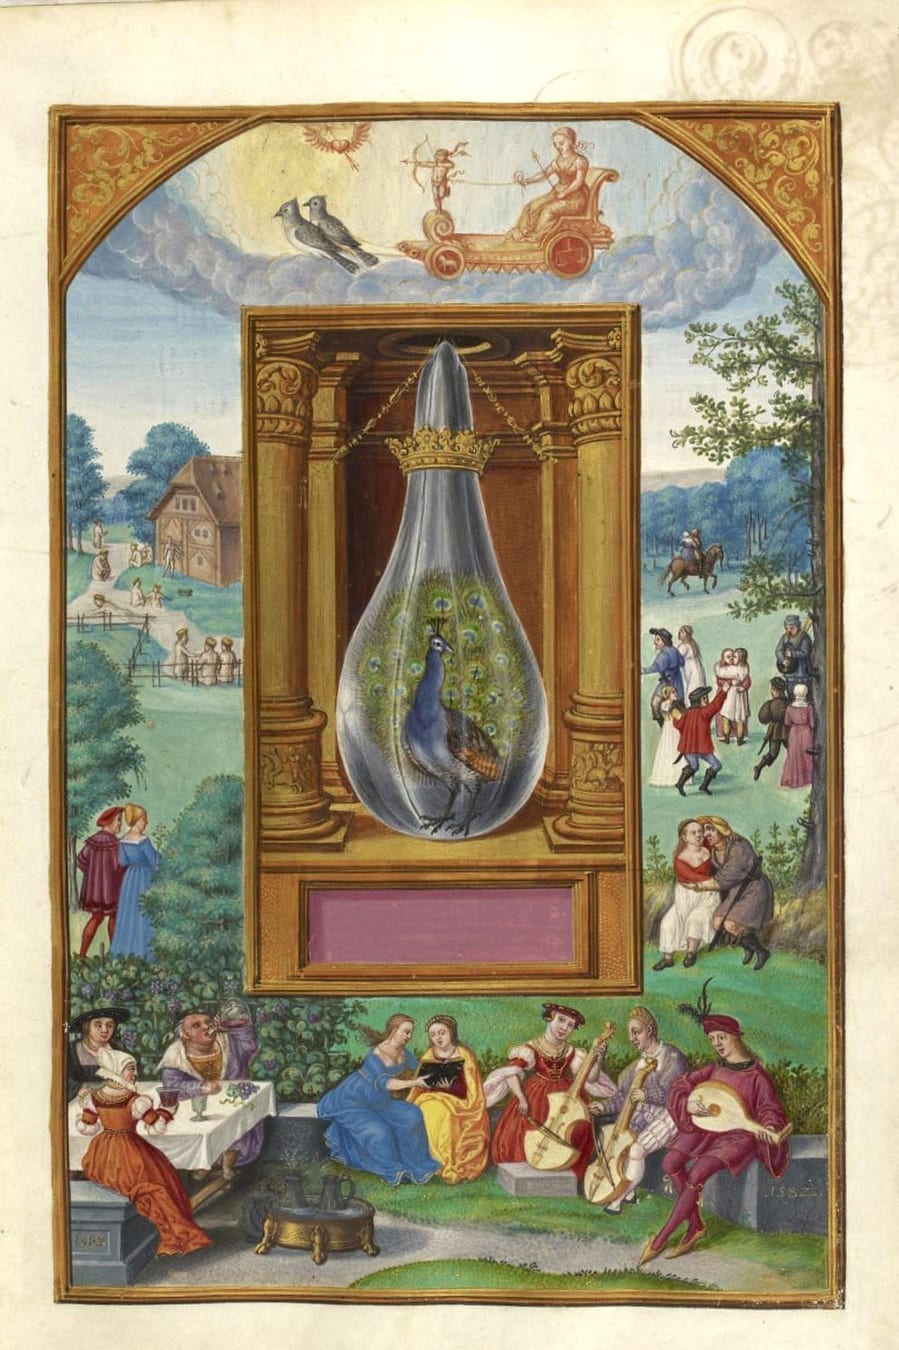 Illustration of a peacock from the Alchemical manuscript Splendor Solis